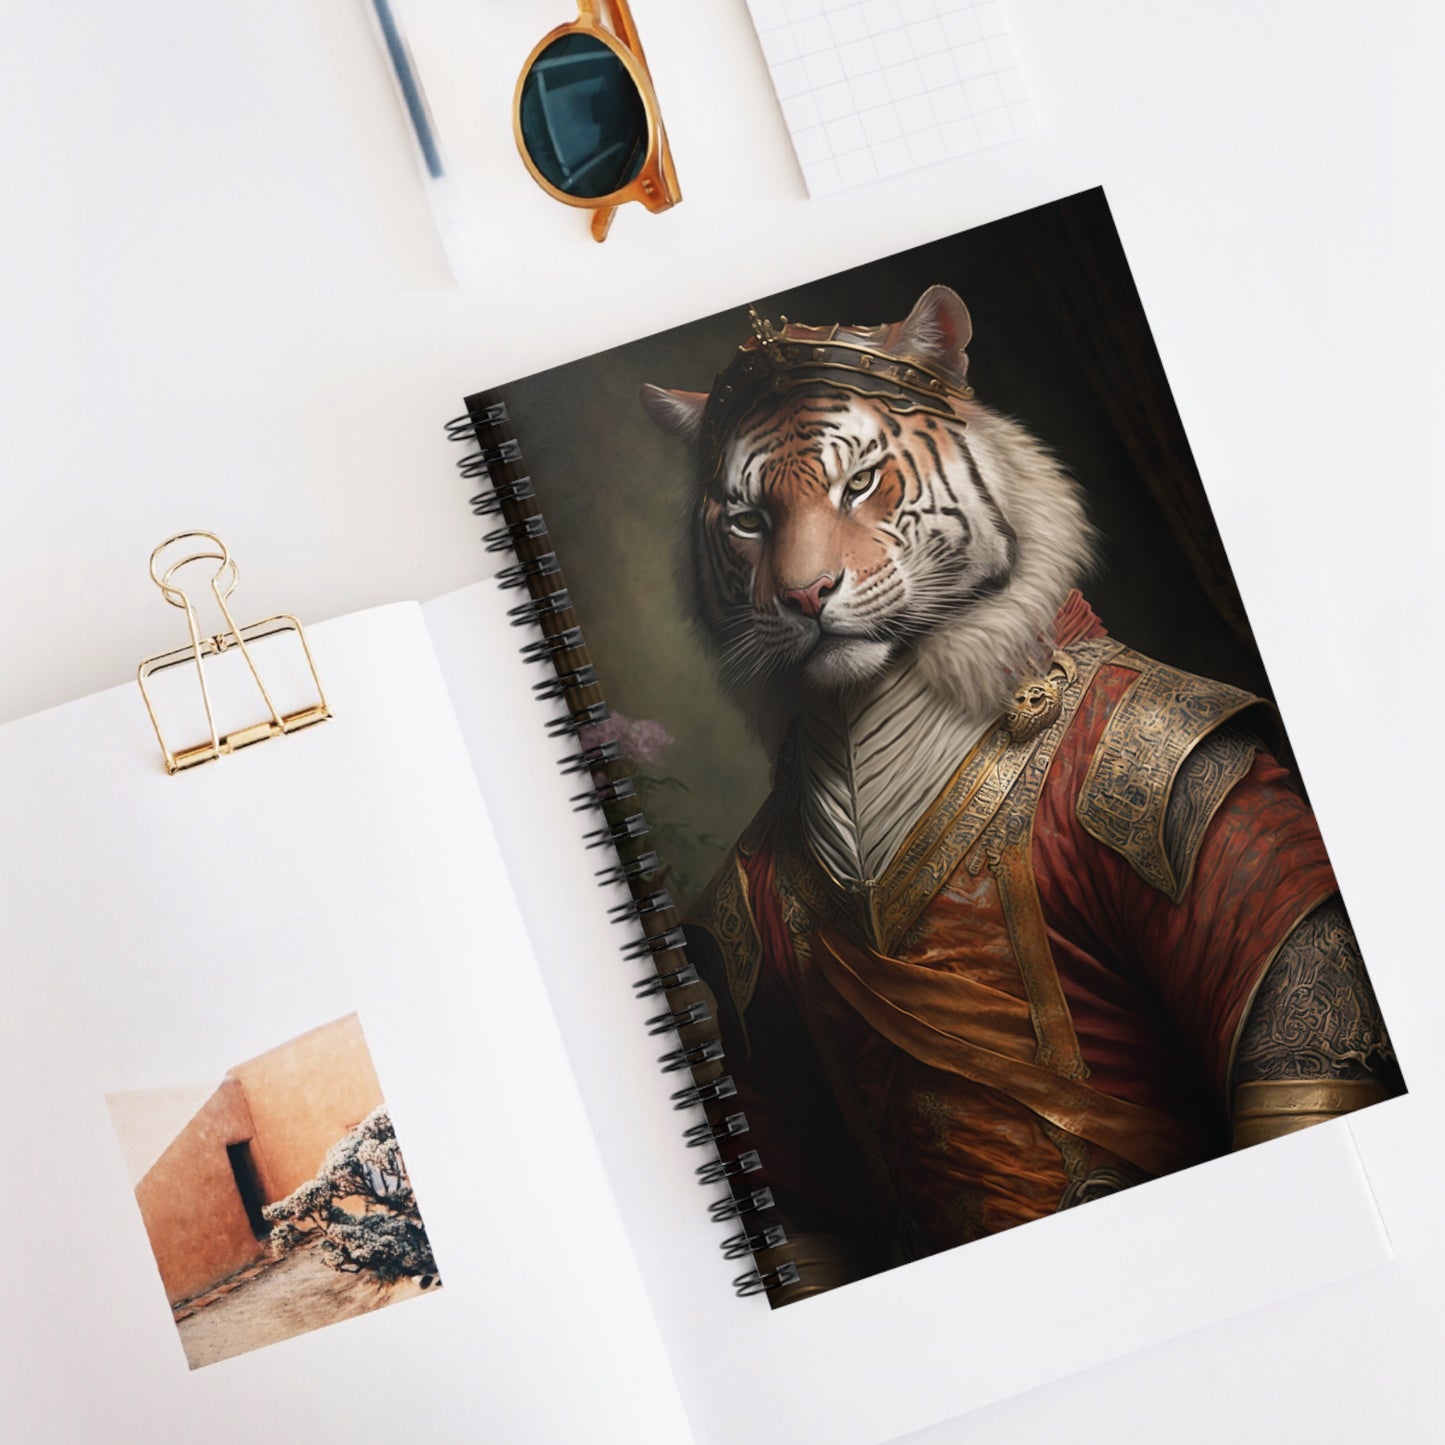 Tiger Aristocrat | Spiral Notebook - Ruled Line